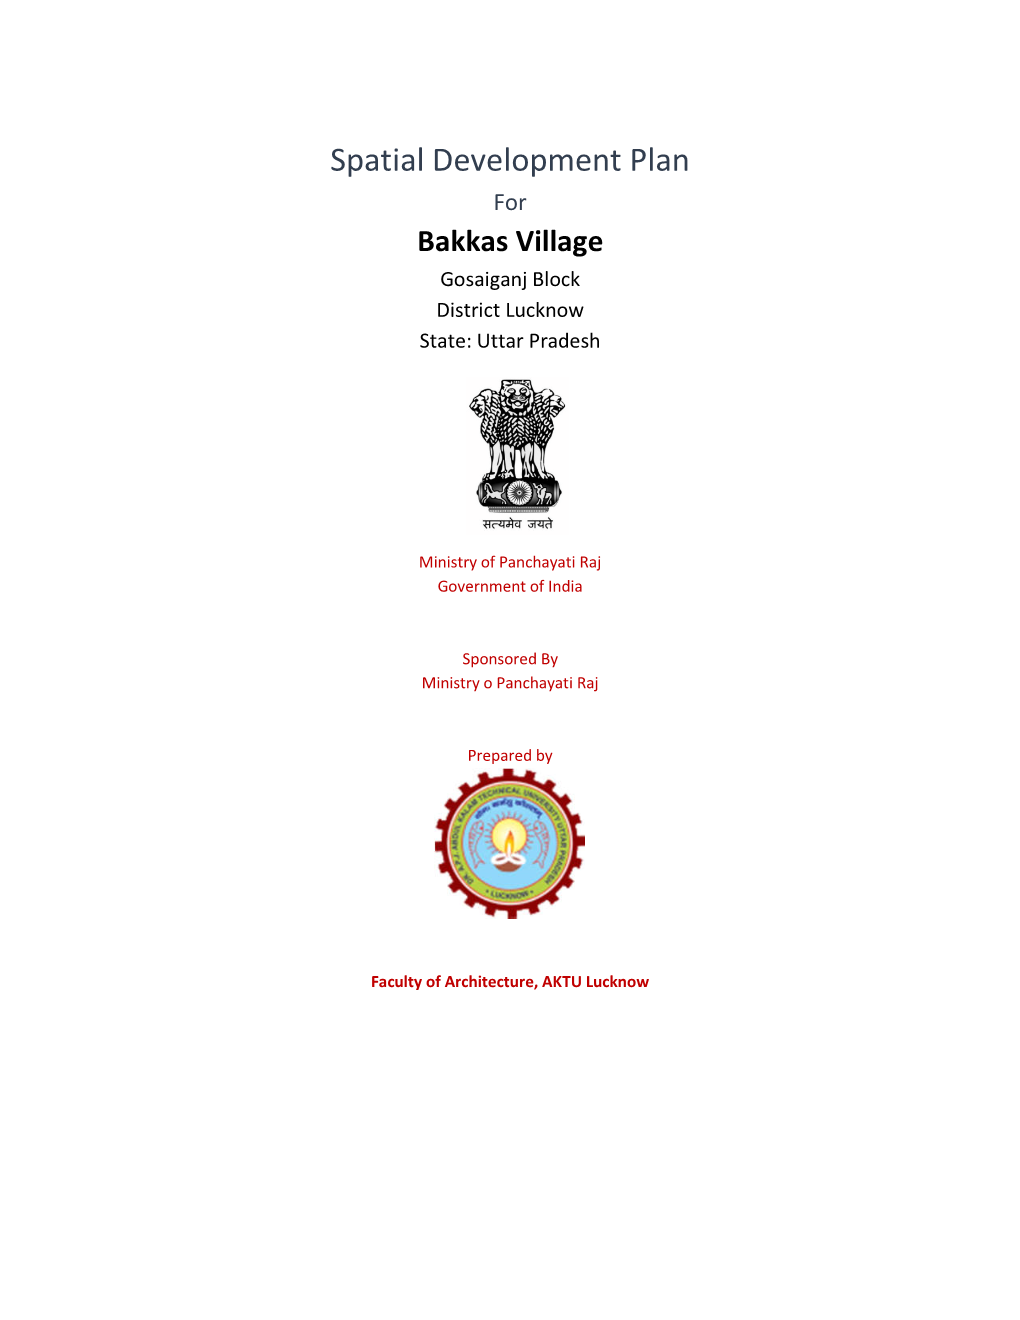 Spatial Development Plan for Bakkas Village Gosaiganj Block District Lucknow State: Uttar Pradesh